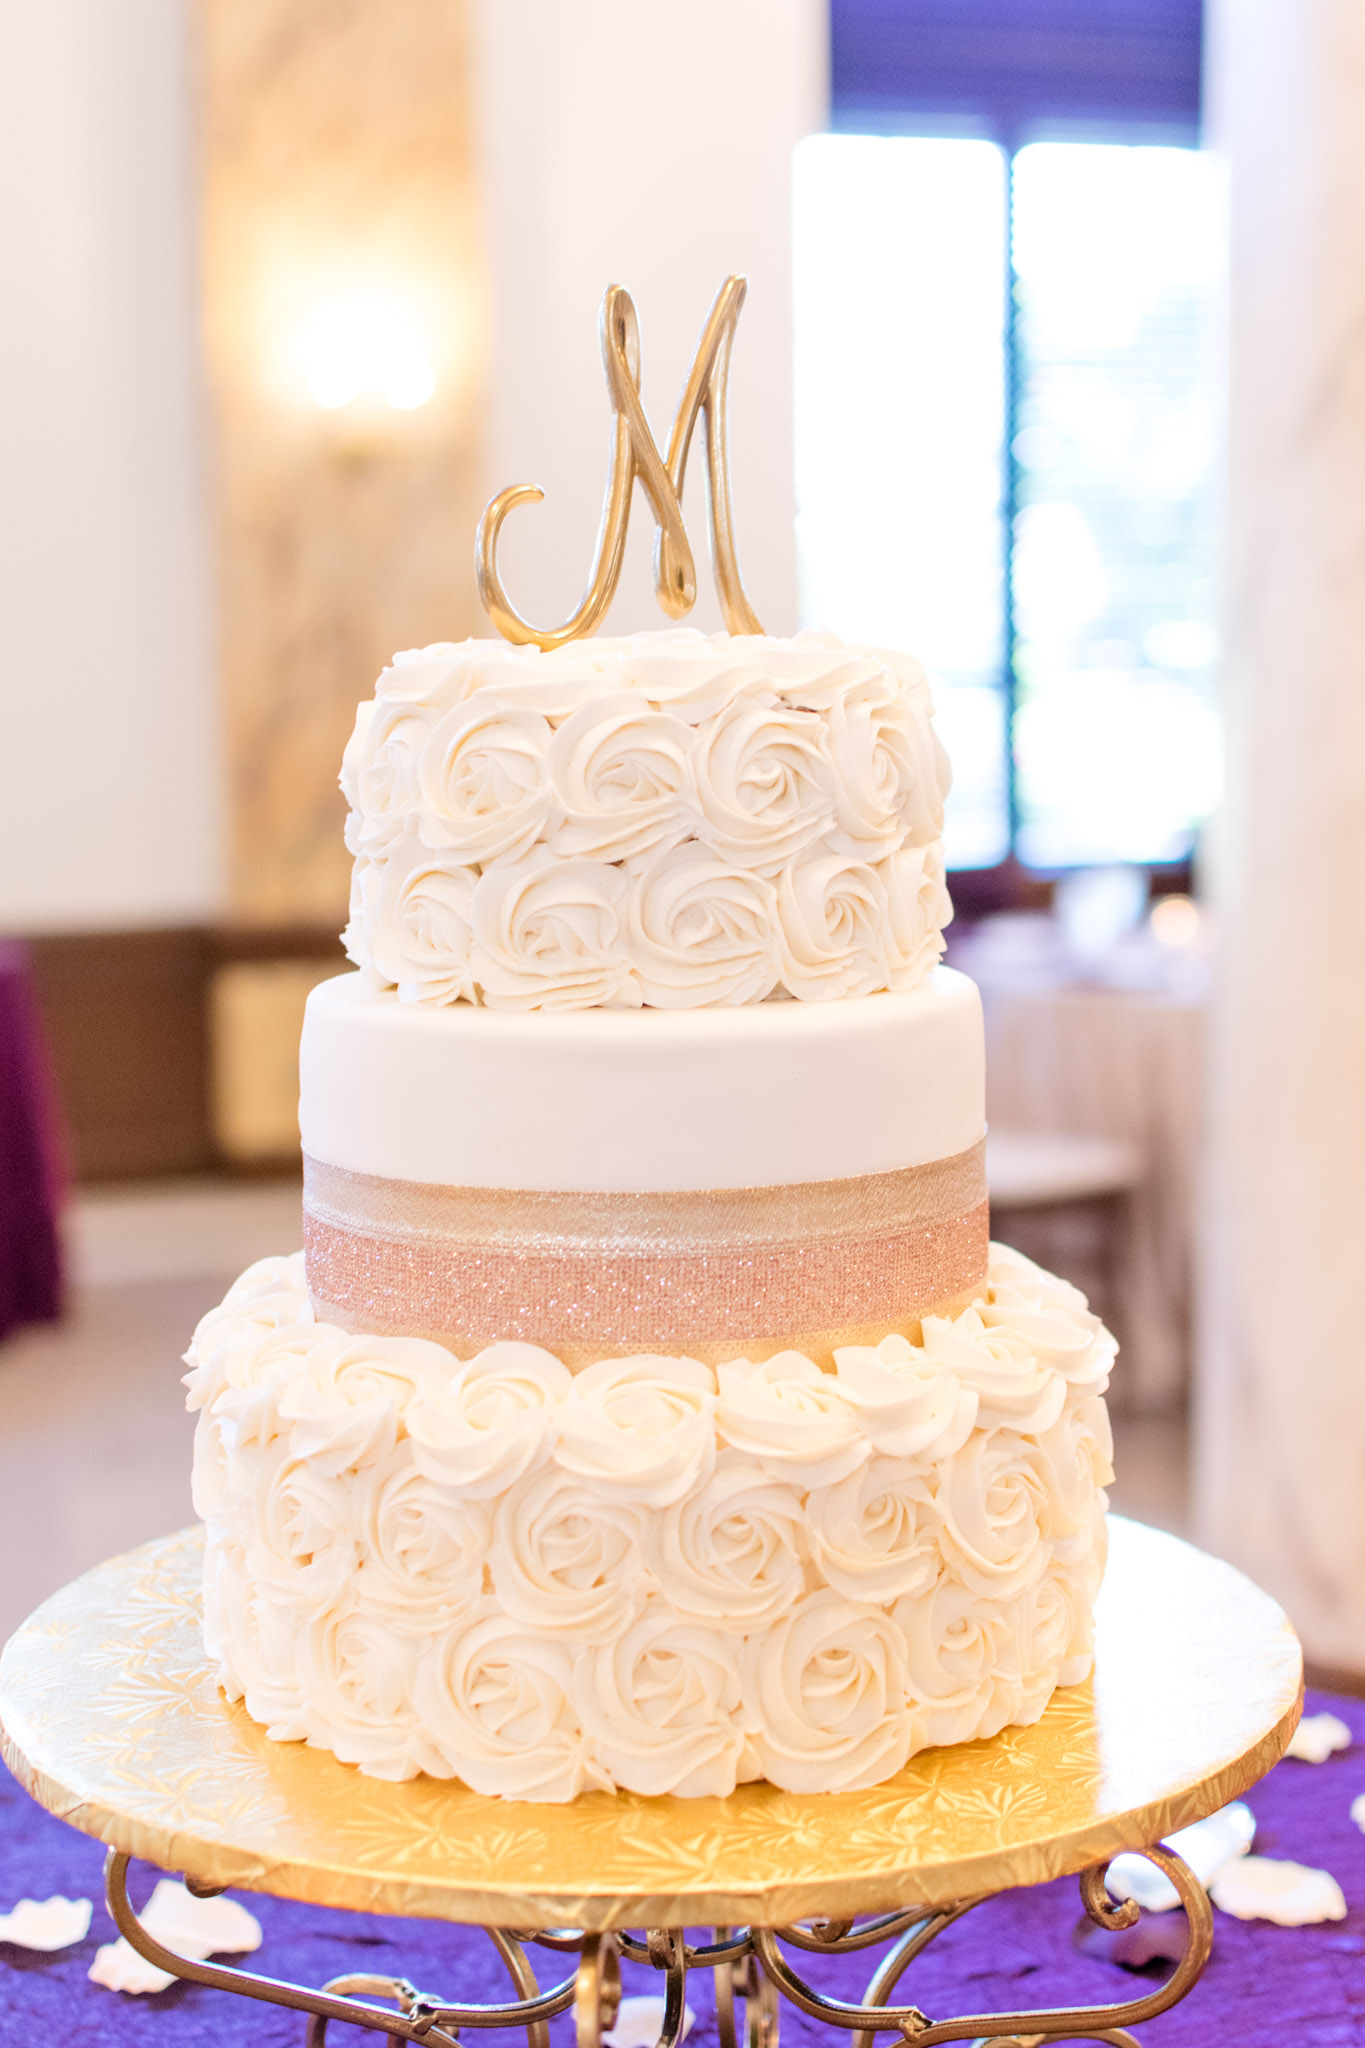 Cream Wedding Cake with M Topper